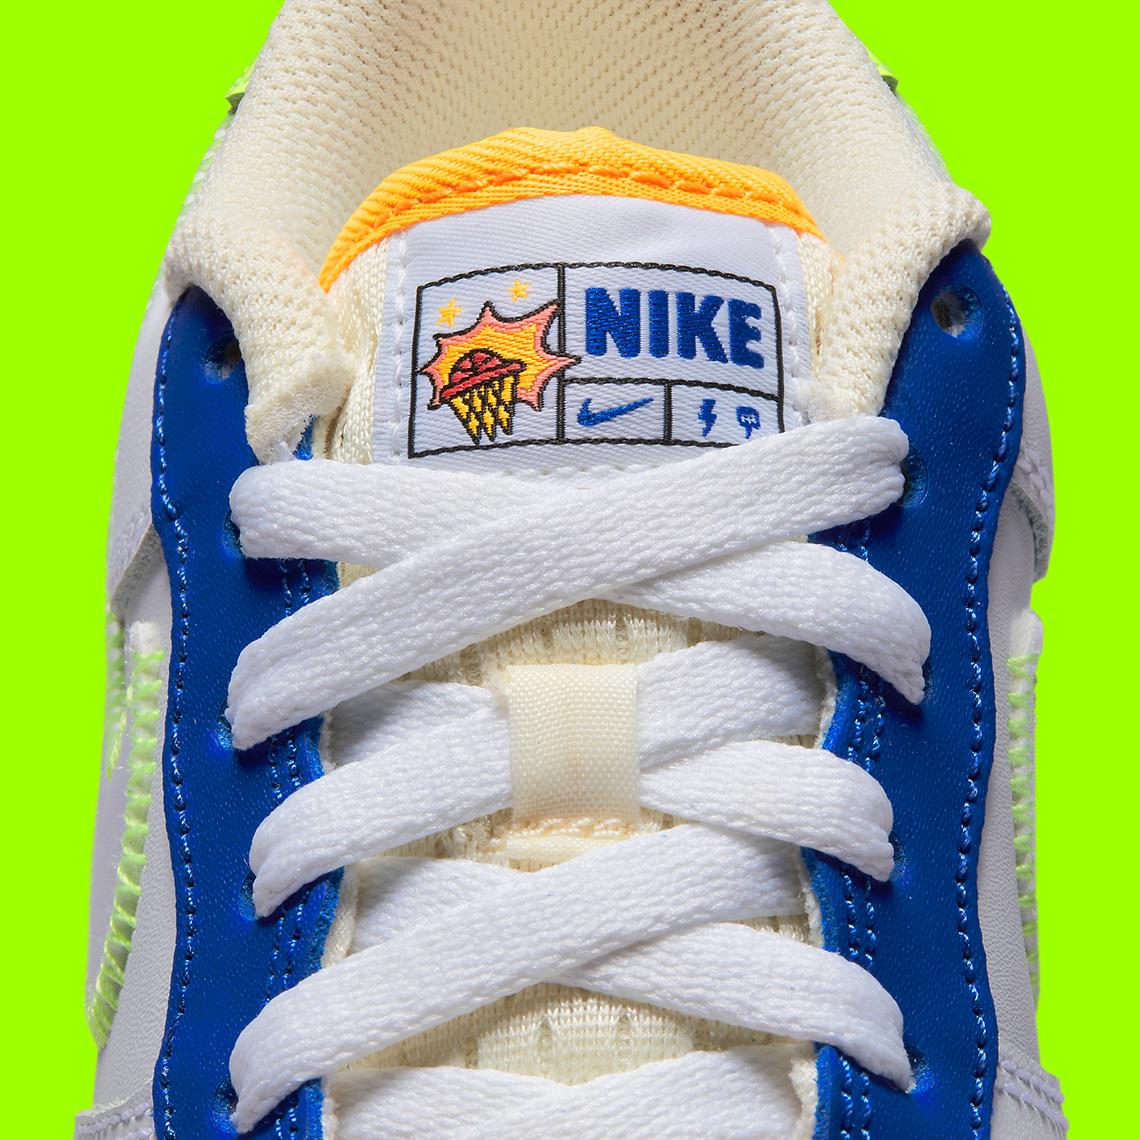 Nike nike training shoes white size 10 crochet thread Low Gs Hoops Fb1393 111 2